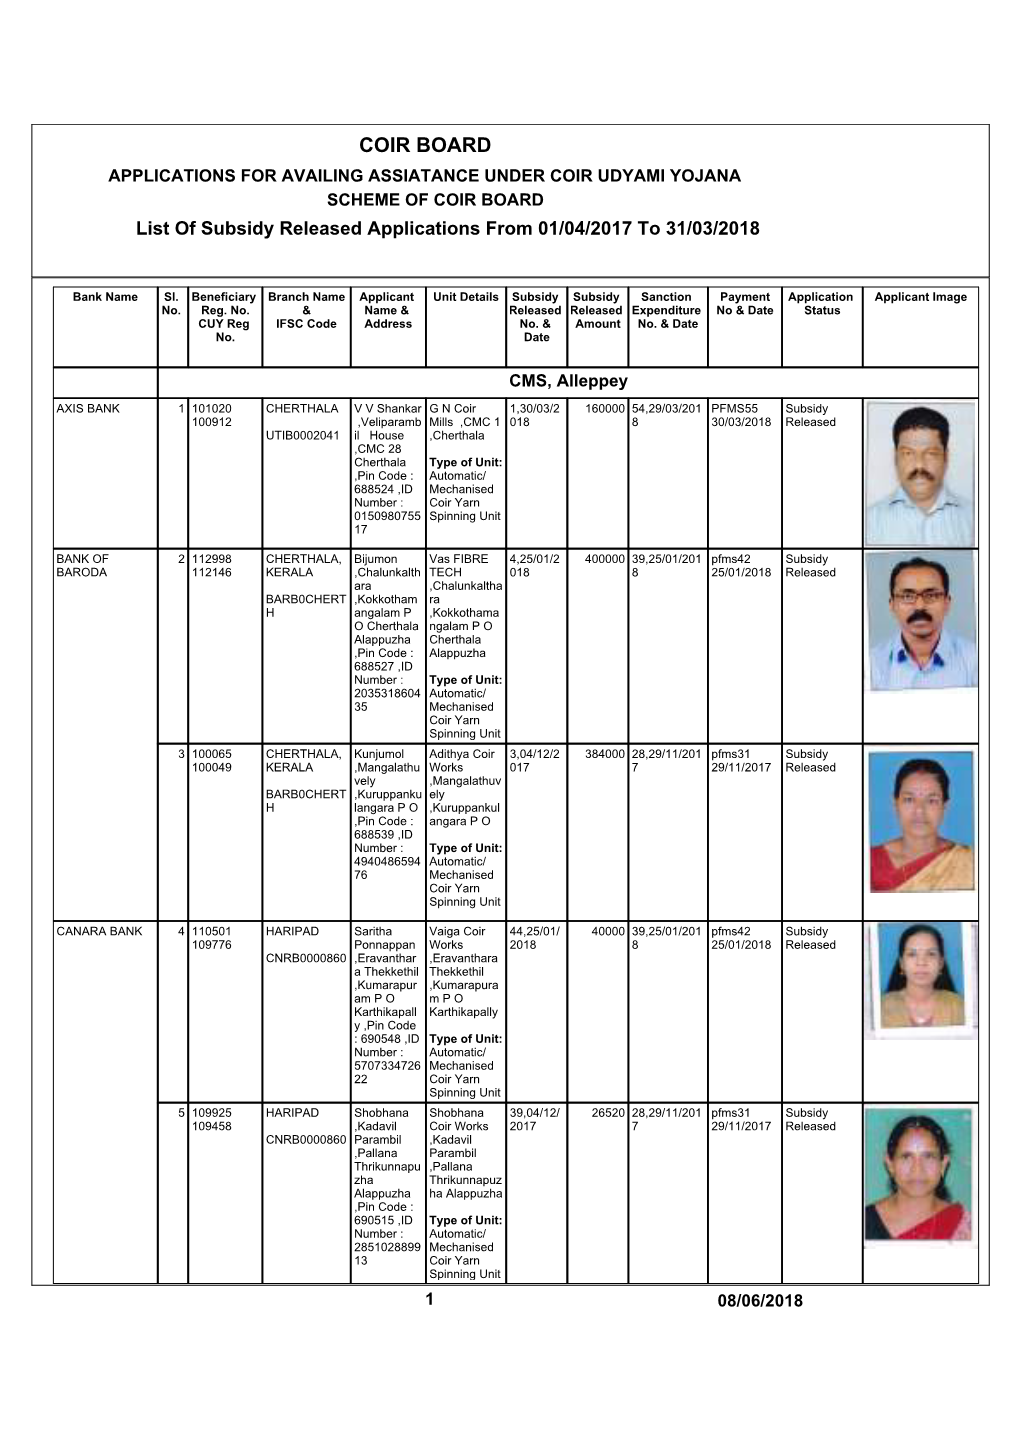 List of Units Assisted Under Coir Udyami Yojana 2017-18